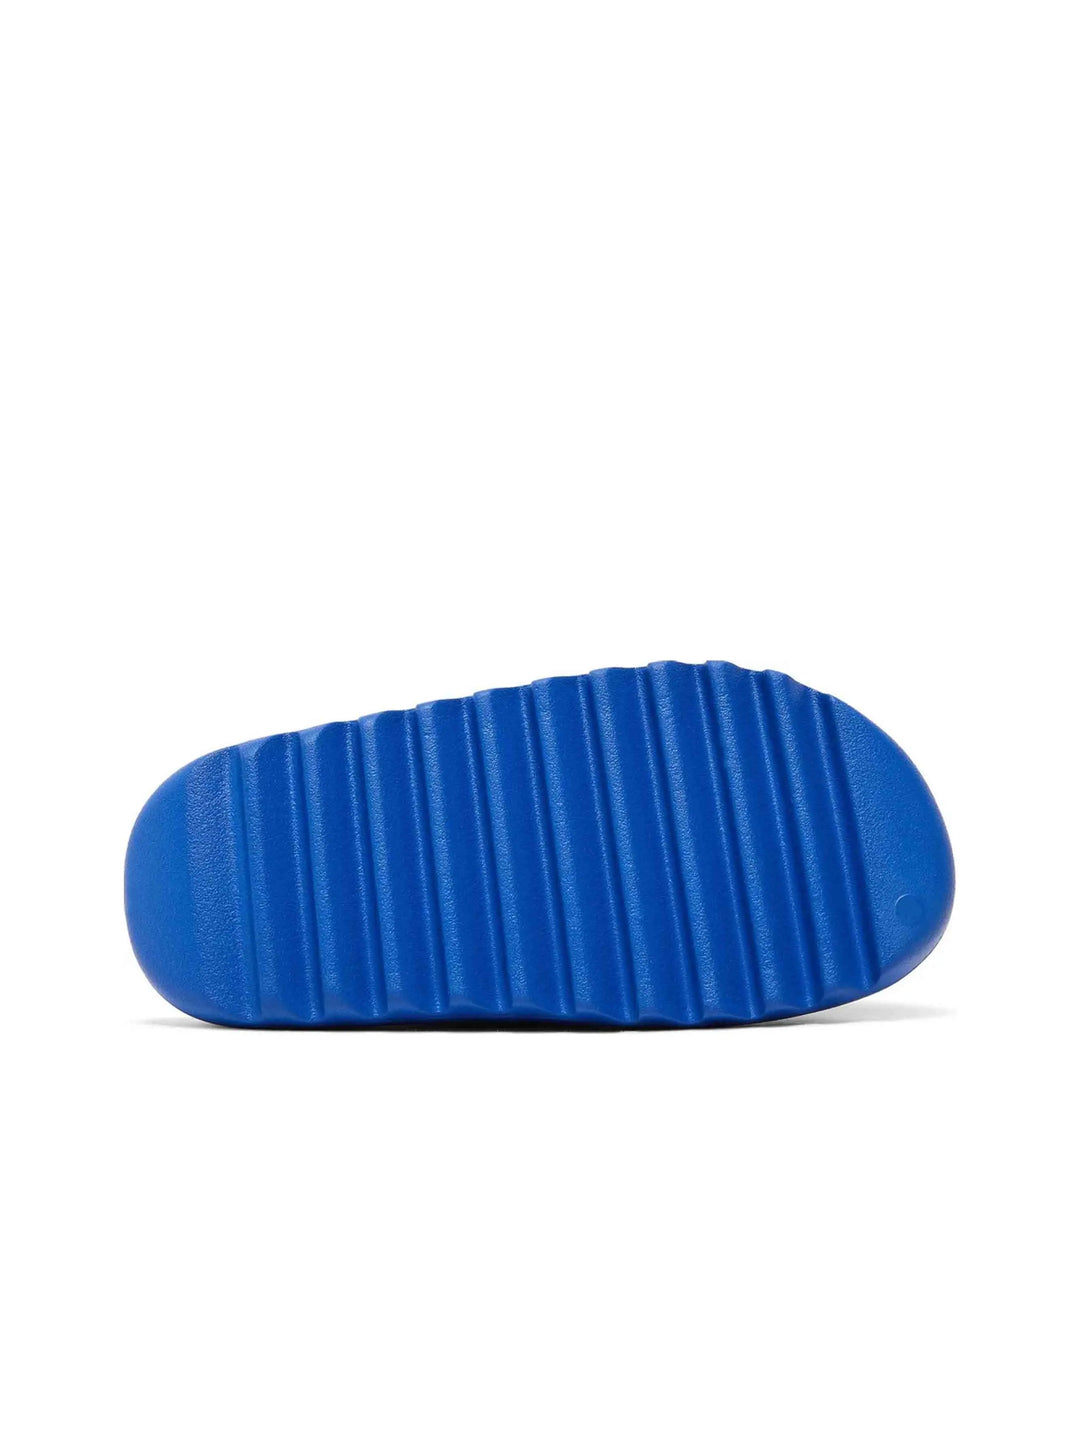 adidas Yeezy Slide Azure - Prior